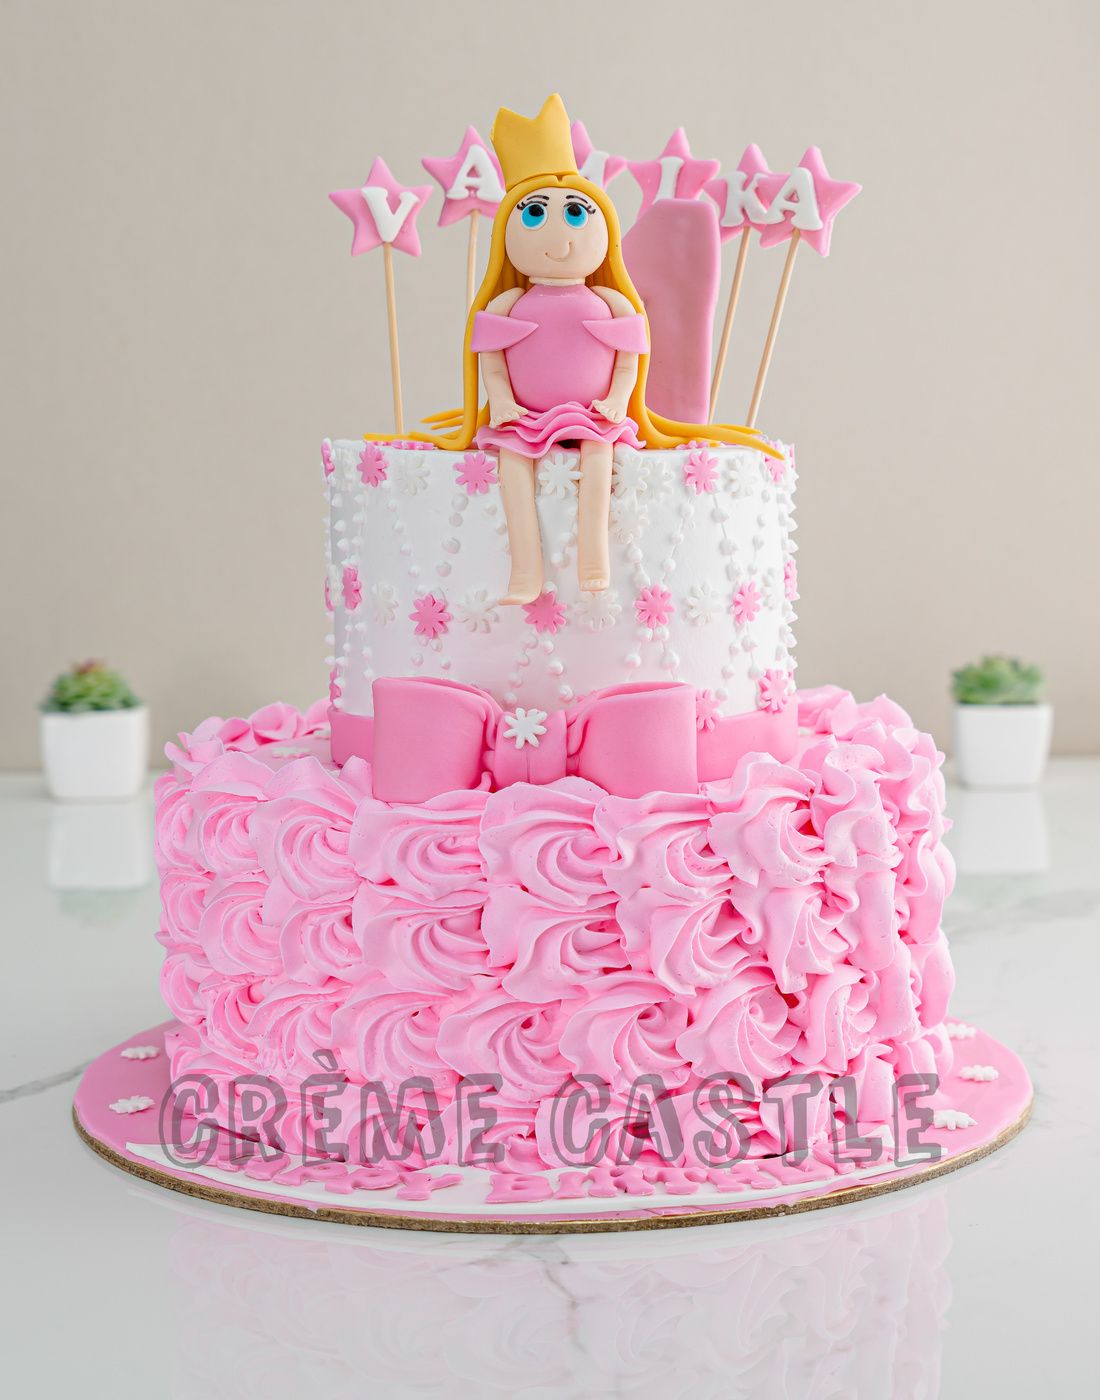 Layered Princess Cake Recipe: How to Make It